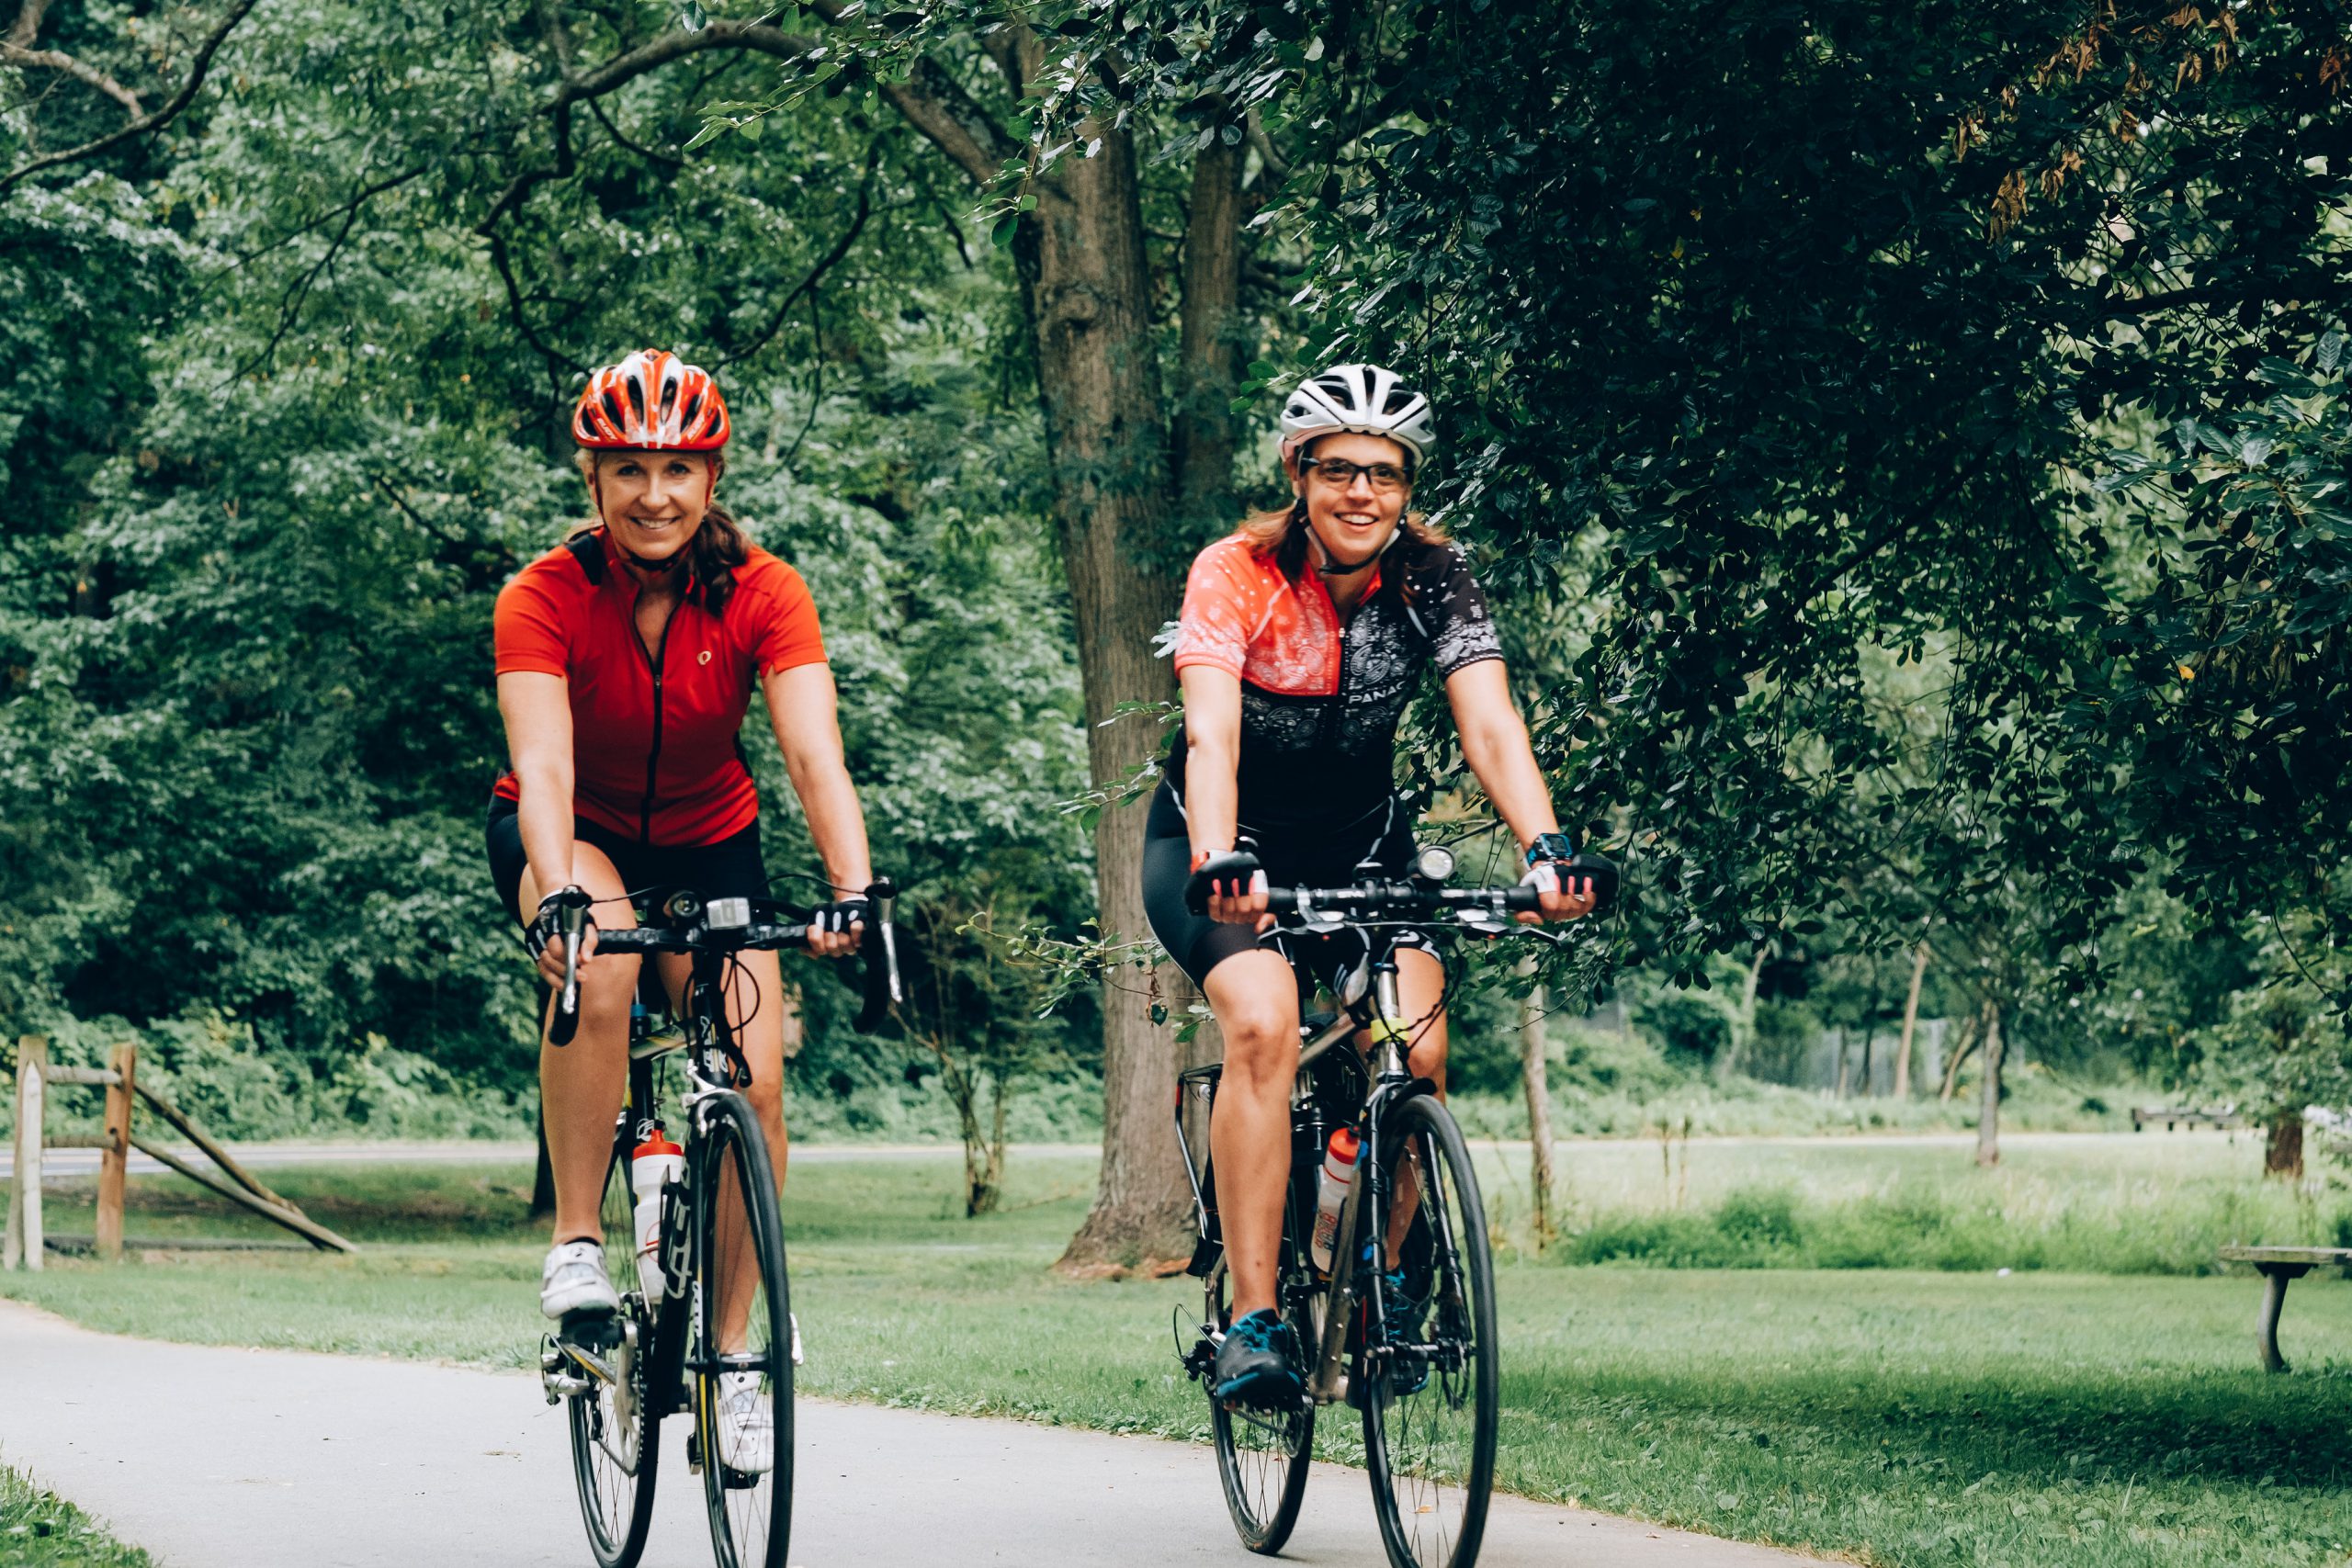 women biking - 3 tips to gain immediate confidence in fitness/